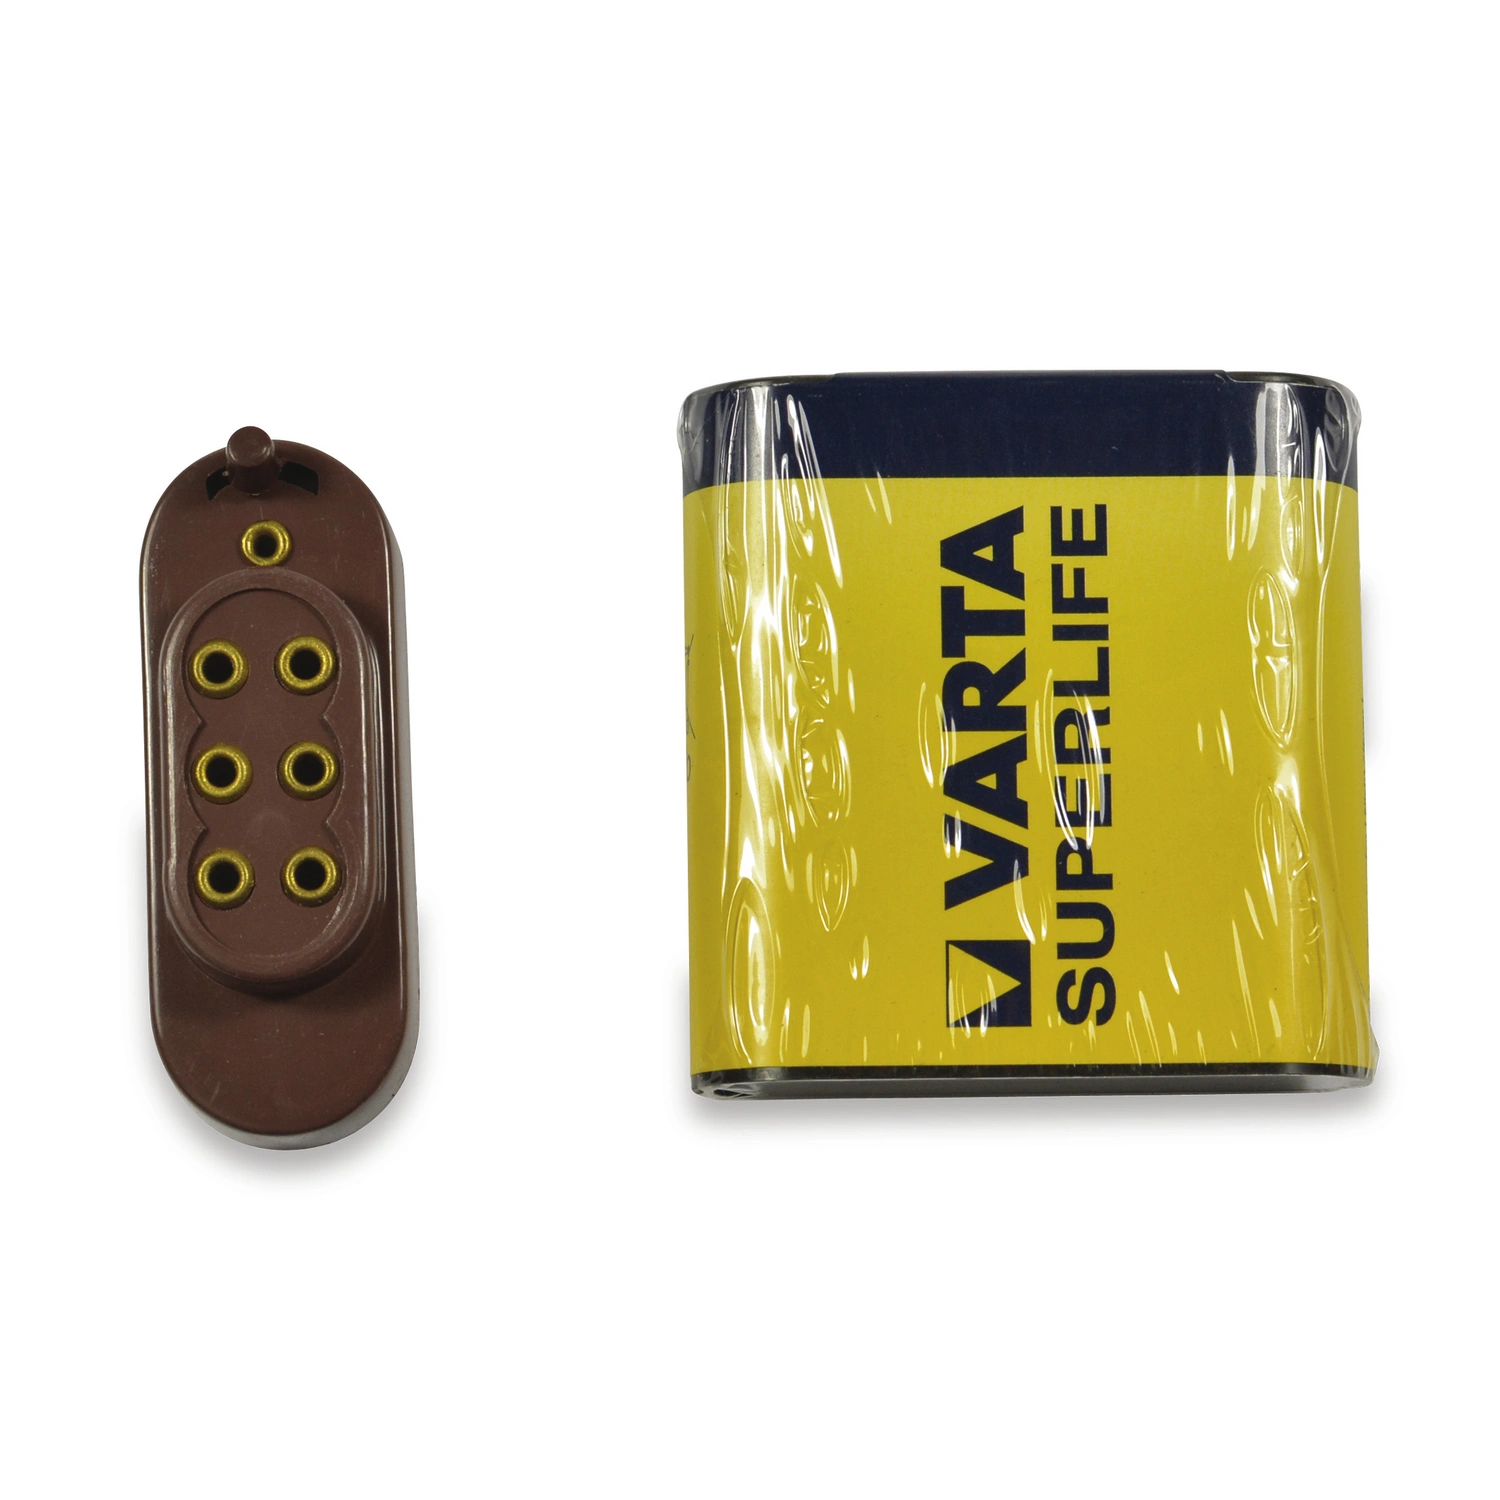 VARTA Flachbatterie, 4,5 V, mit Kappe + Schalter 